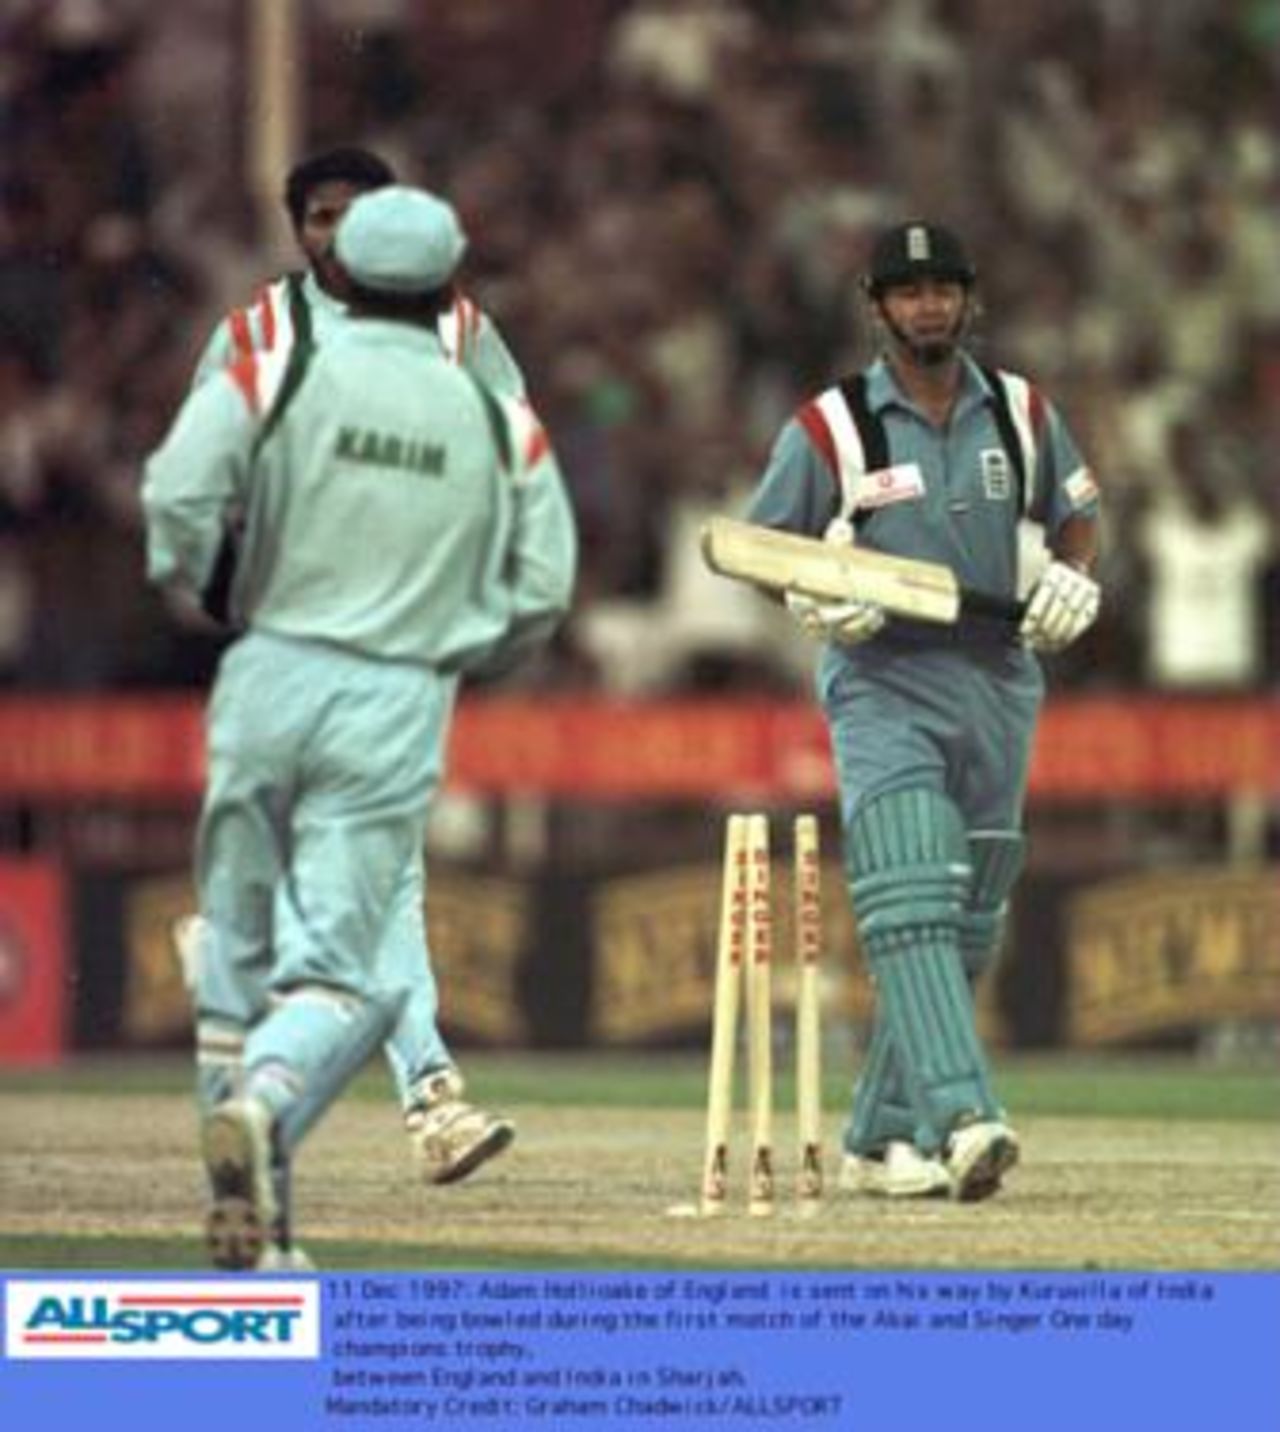 Champion's trophy, December 1997. England v India, 11 Dec 1997: A Hollioake b Kuruvilla